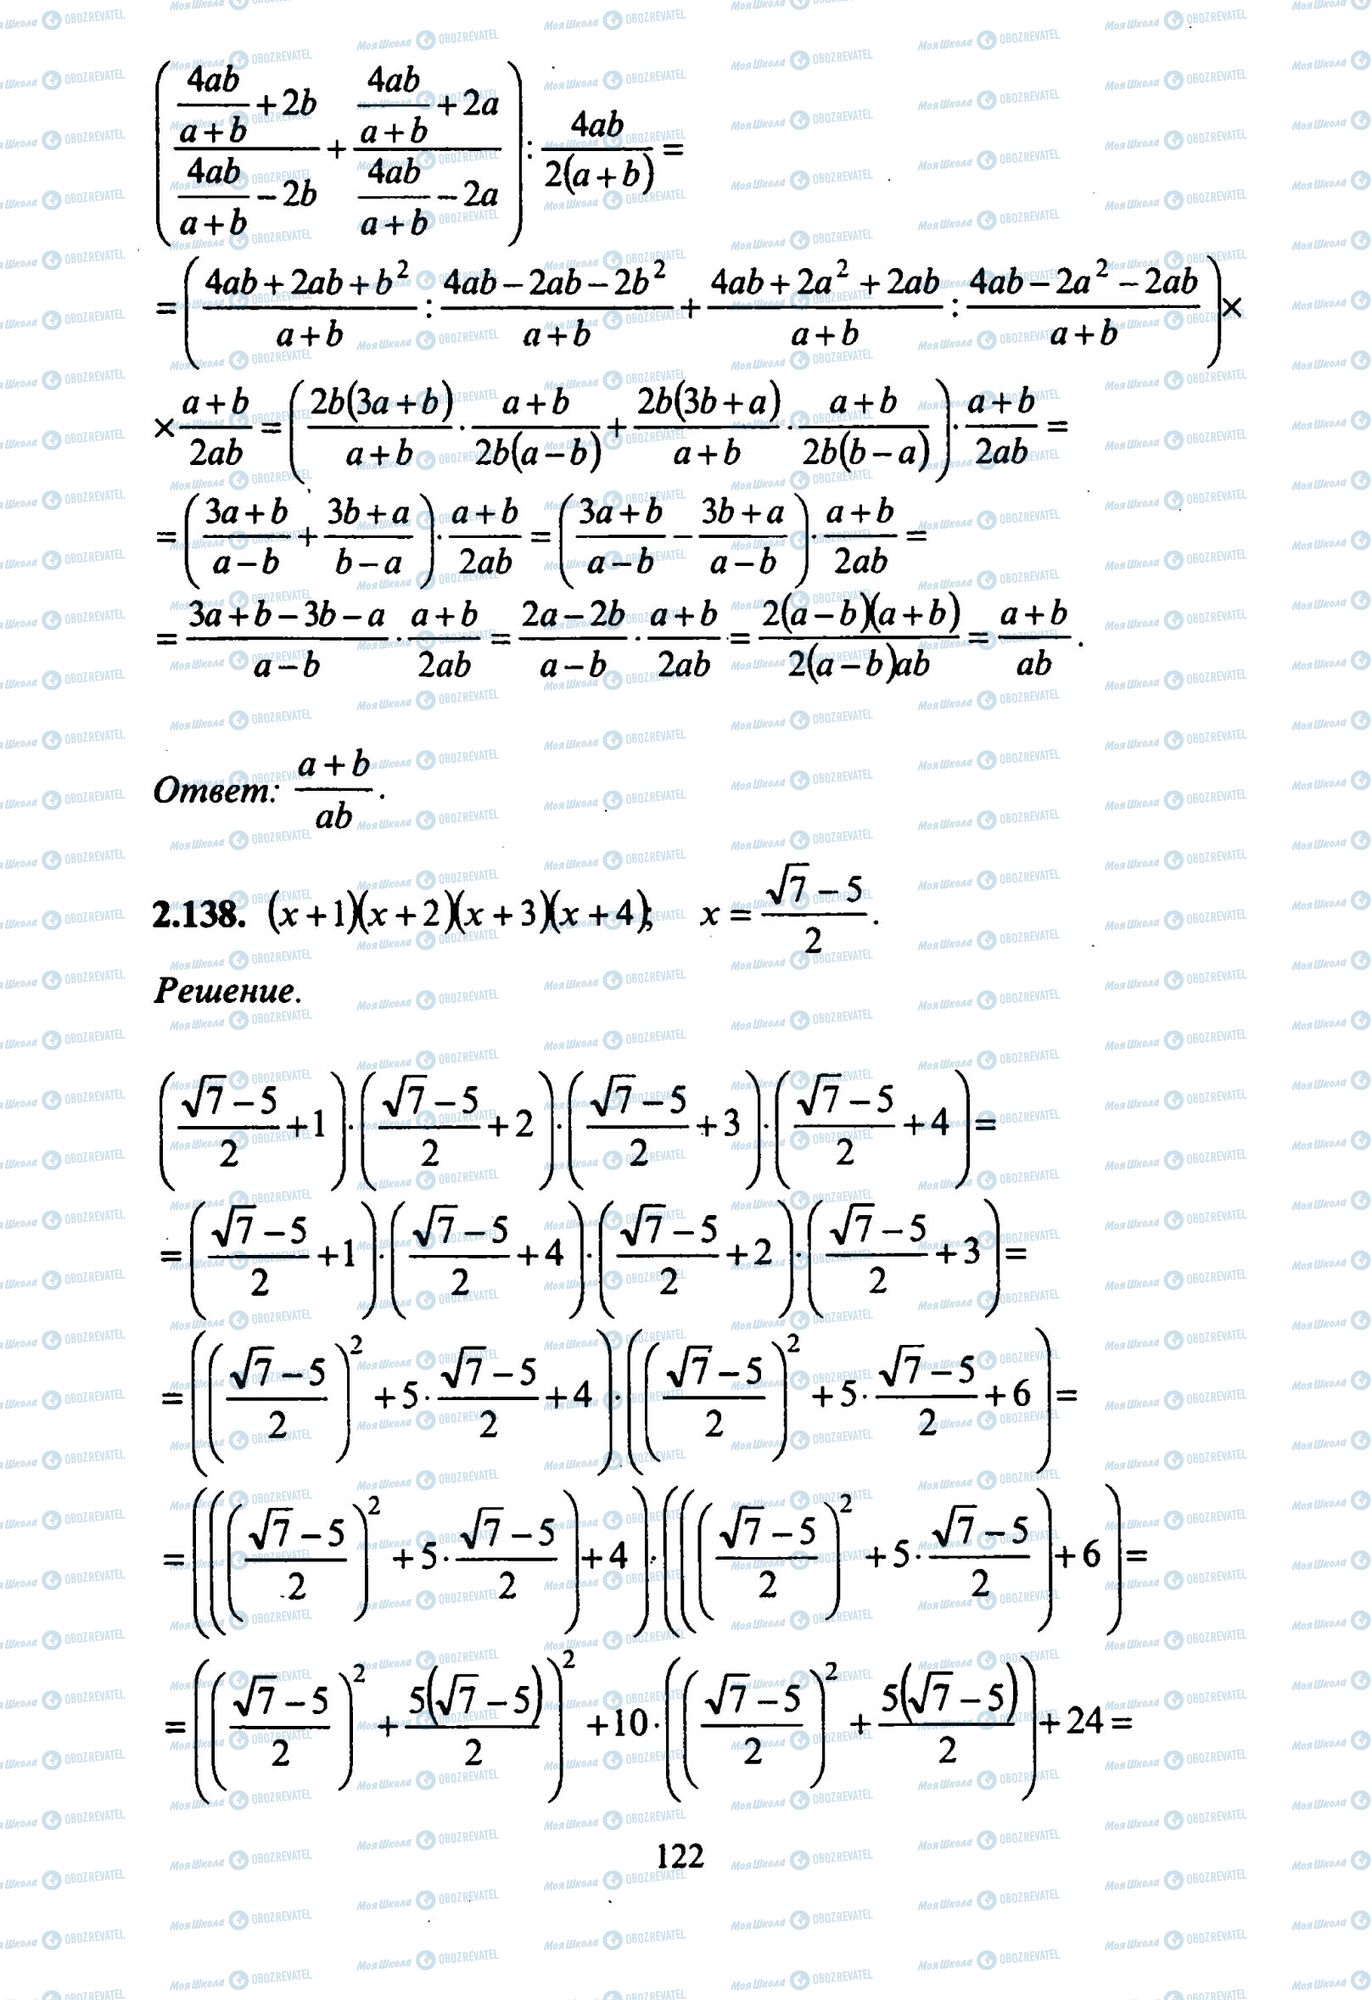 ЗНО Математика 11 класс страница 138